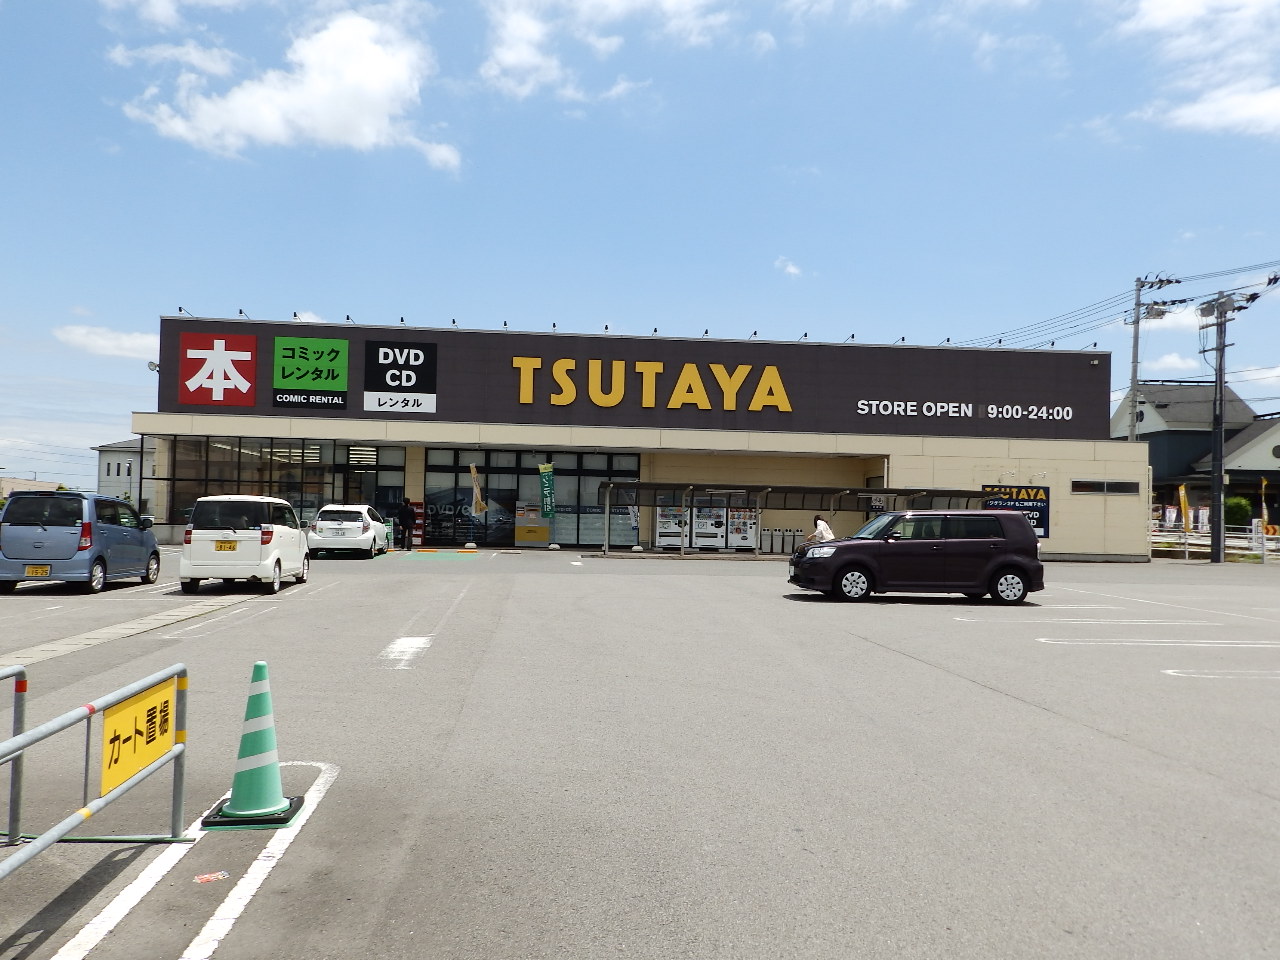 Rental video. TSUTAYA Ishii shop 1728m up (video rental)